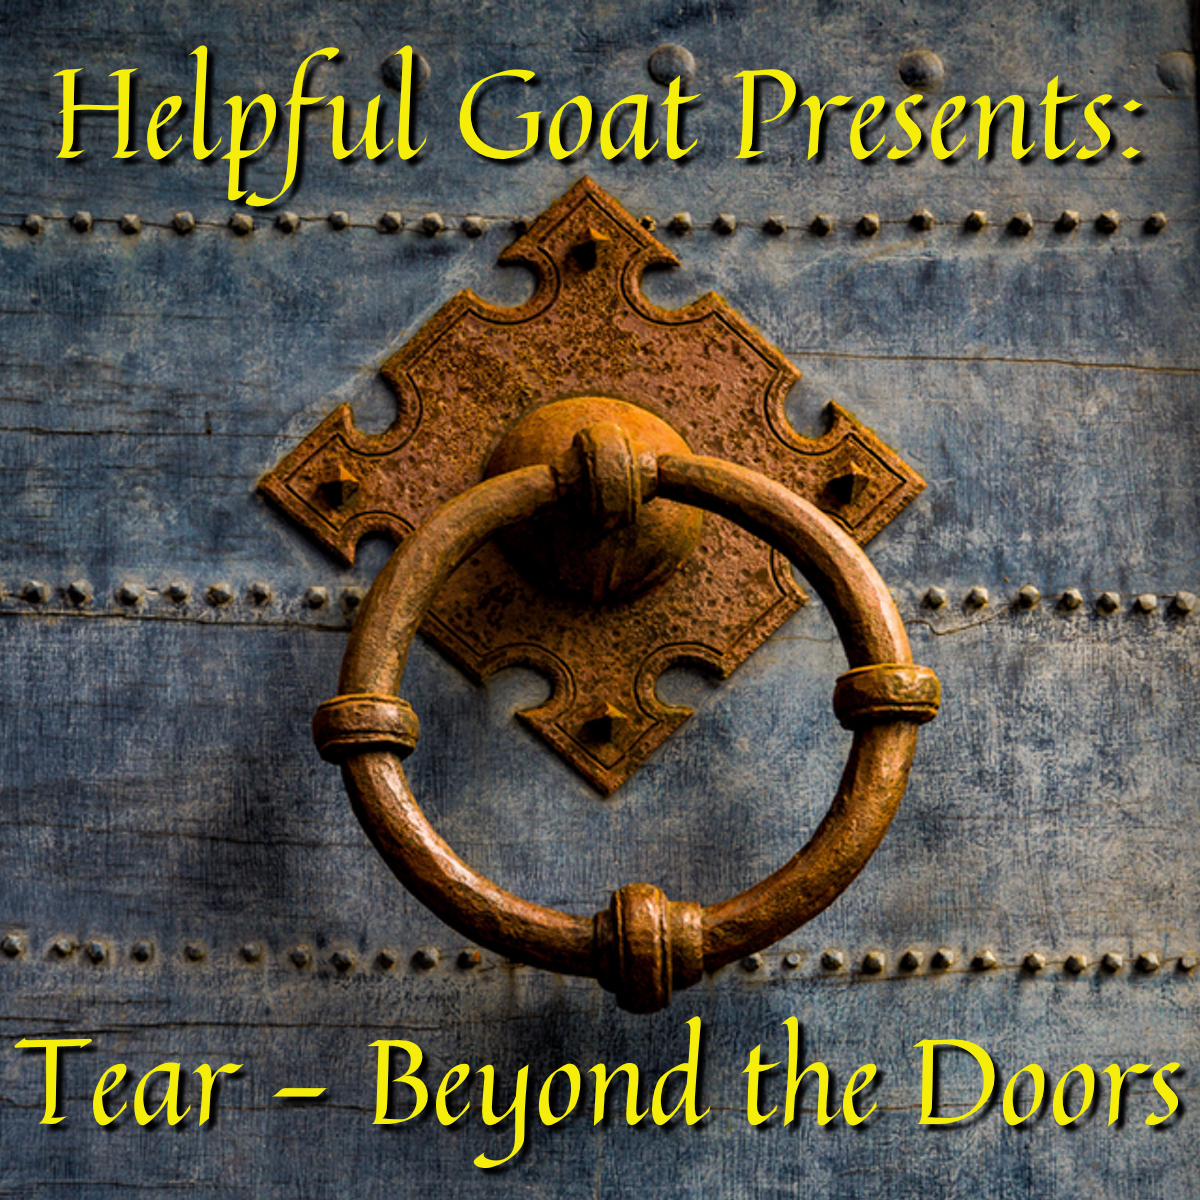 Tear: Beyond the Doors, Ep 32 - On the Doorstep